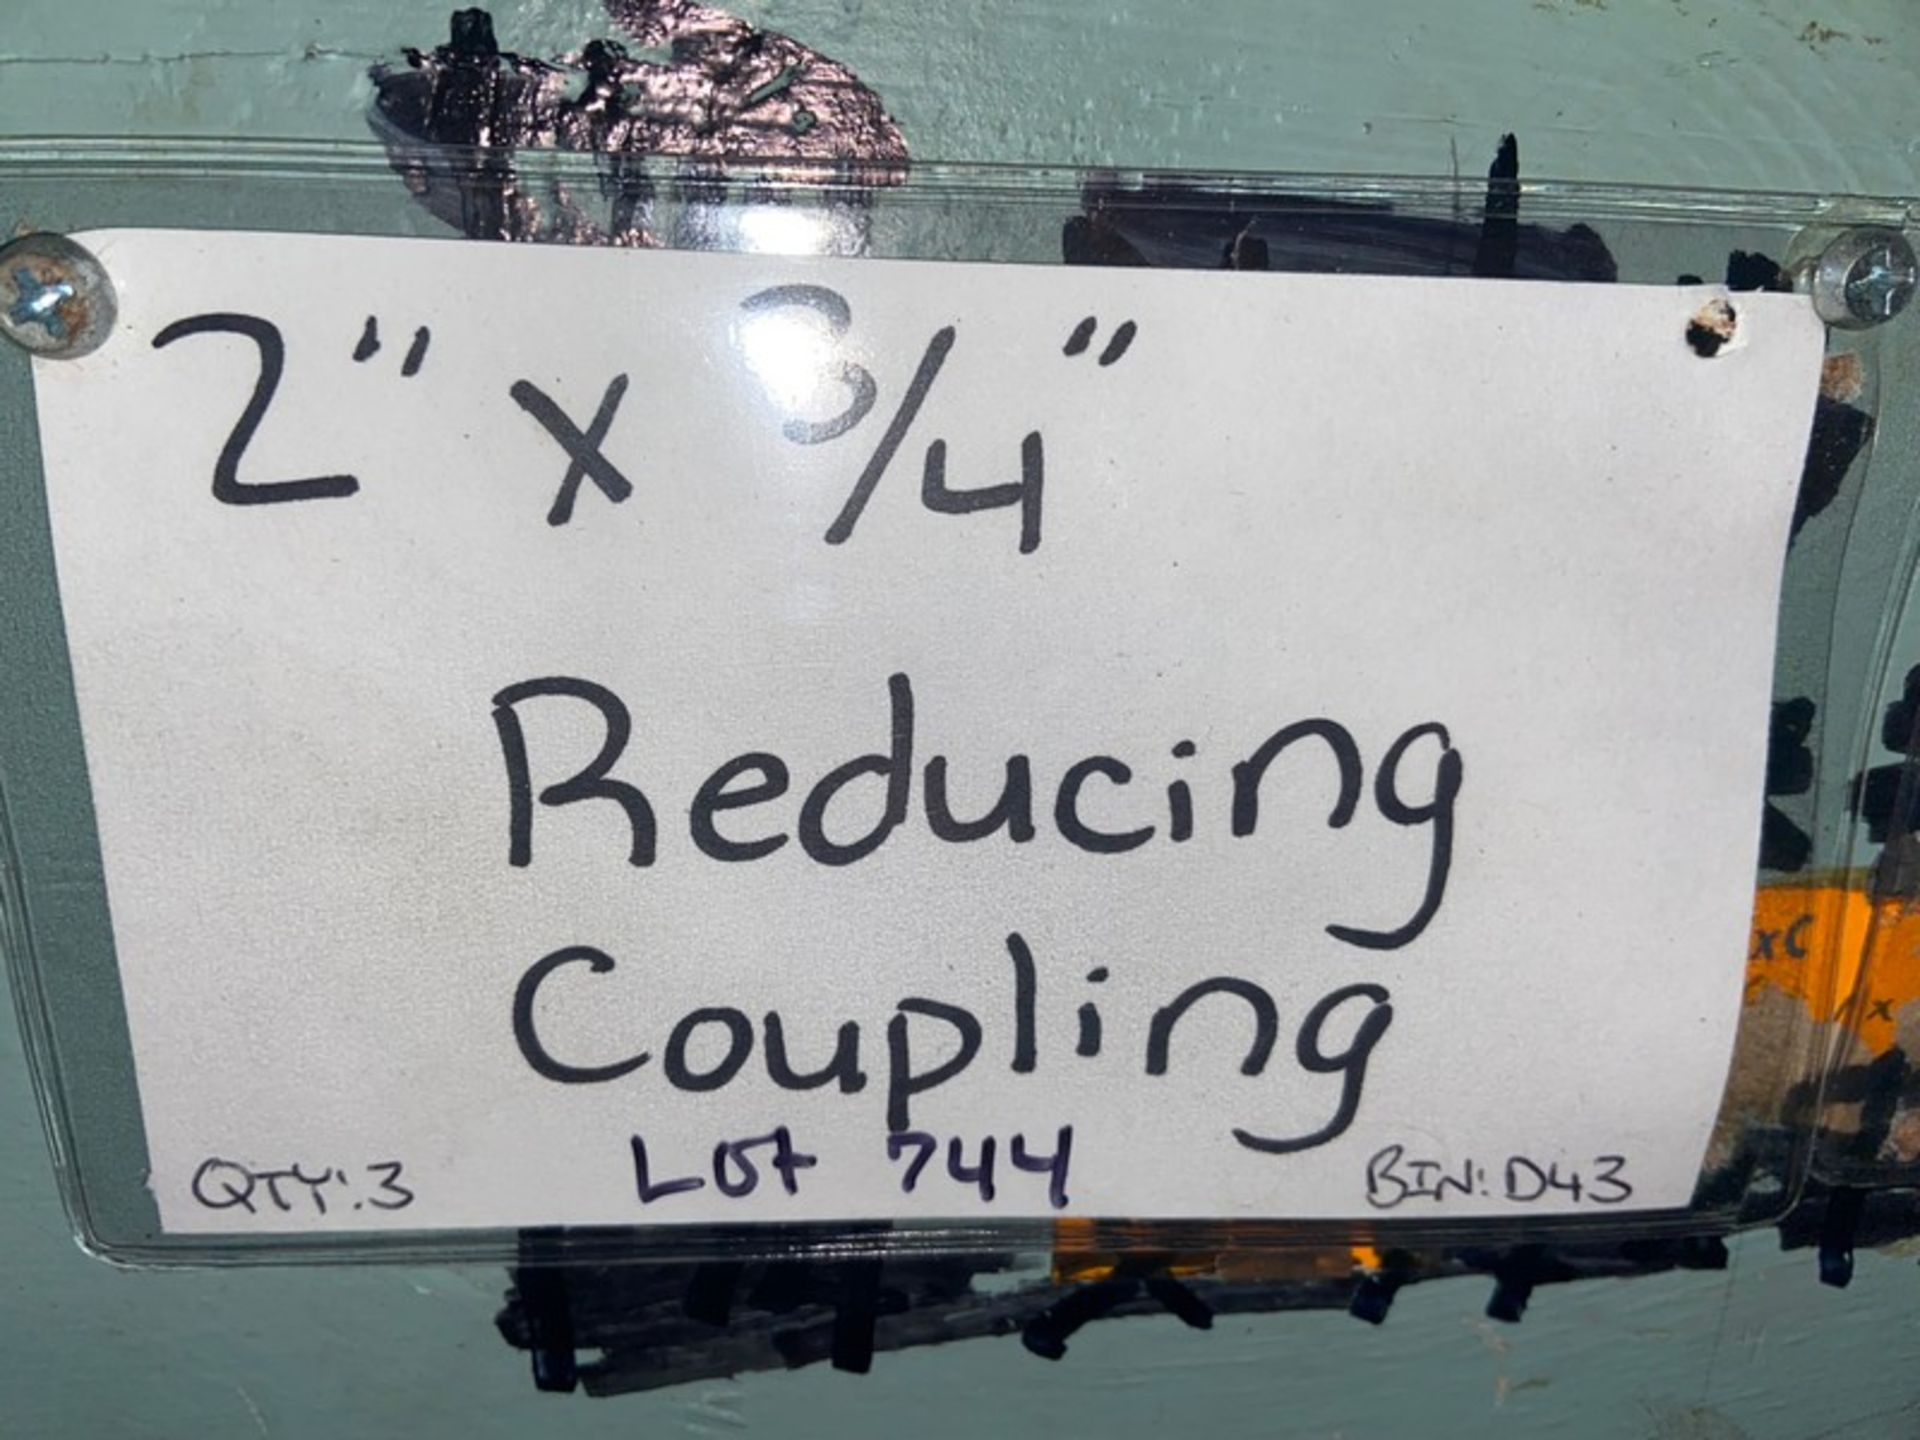 (12)2”x 1/2” Reducing Coupking (Bin:D42); (3) 2”x 3/4” Reducing Coupling (Bin:D43) (LOCATED IN - Image 4 of 4